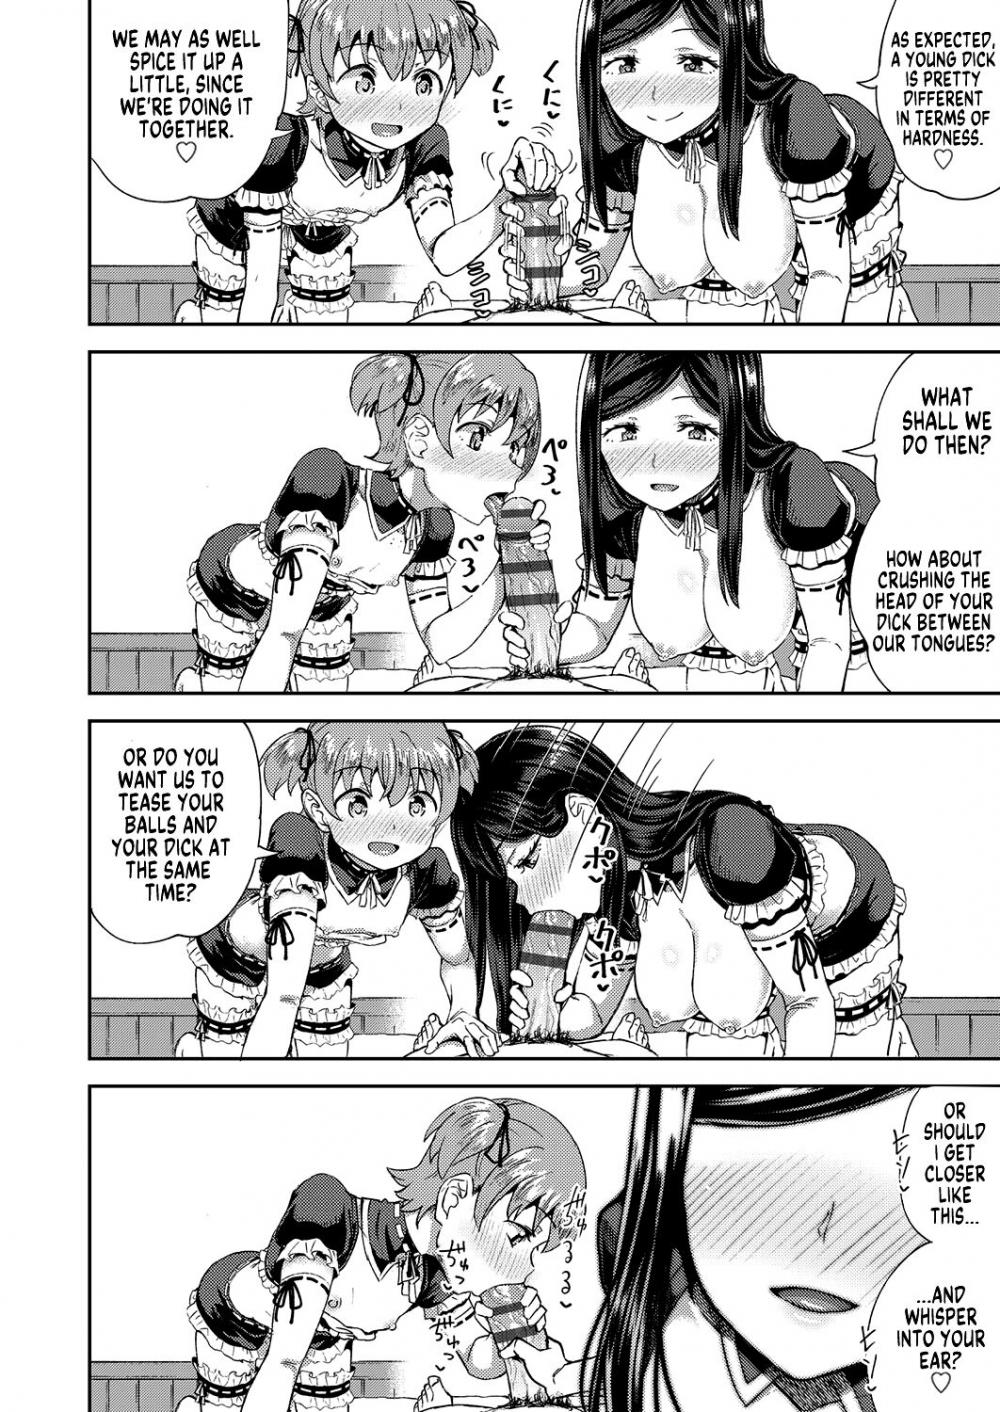 Hentai Manga Comic-My Childhood Friend is my Personal Mouth Maid-v22m-v22m-v22m-Chapter 3-2